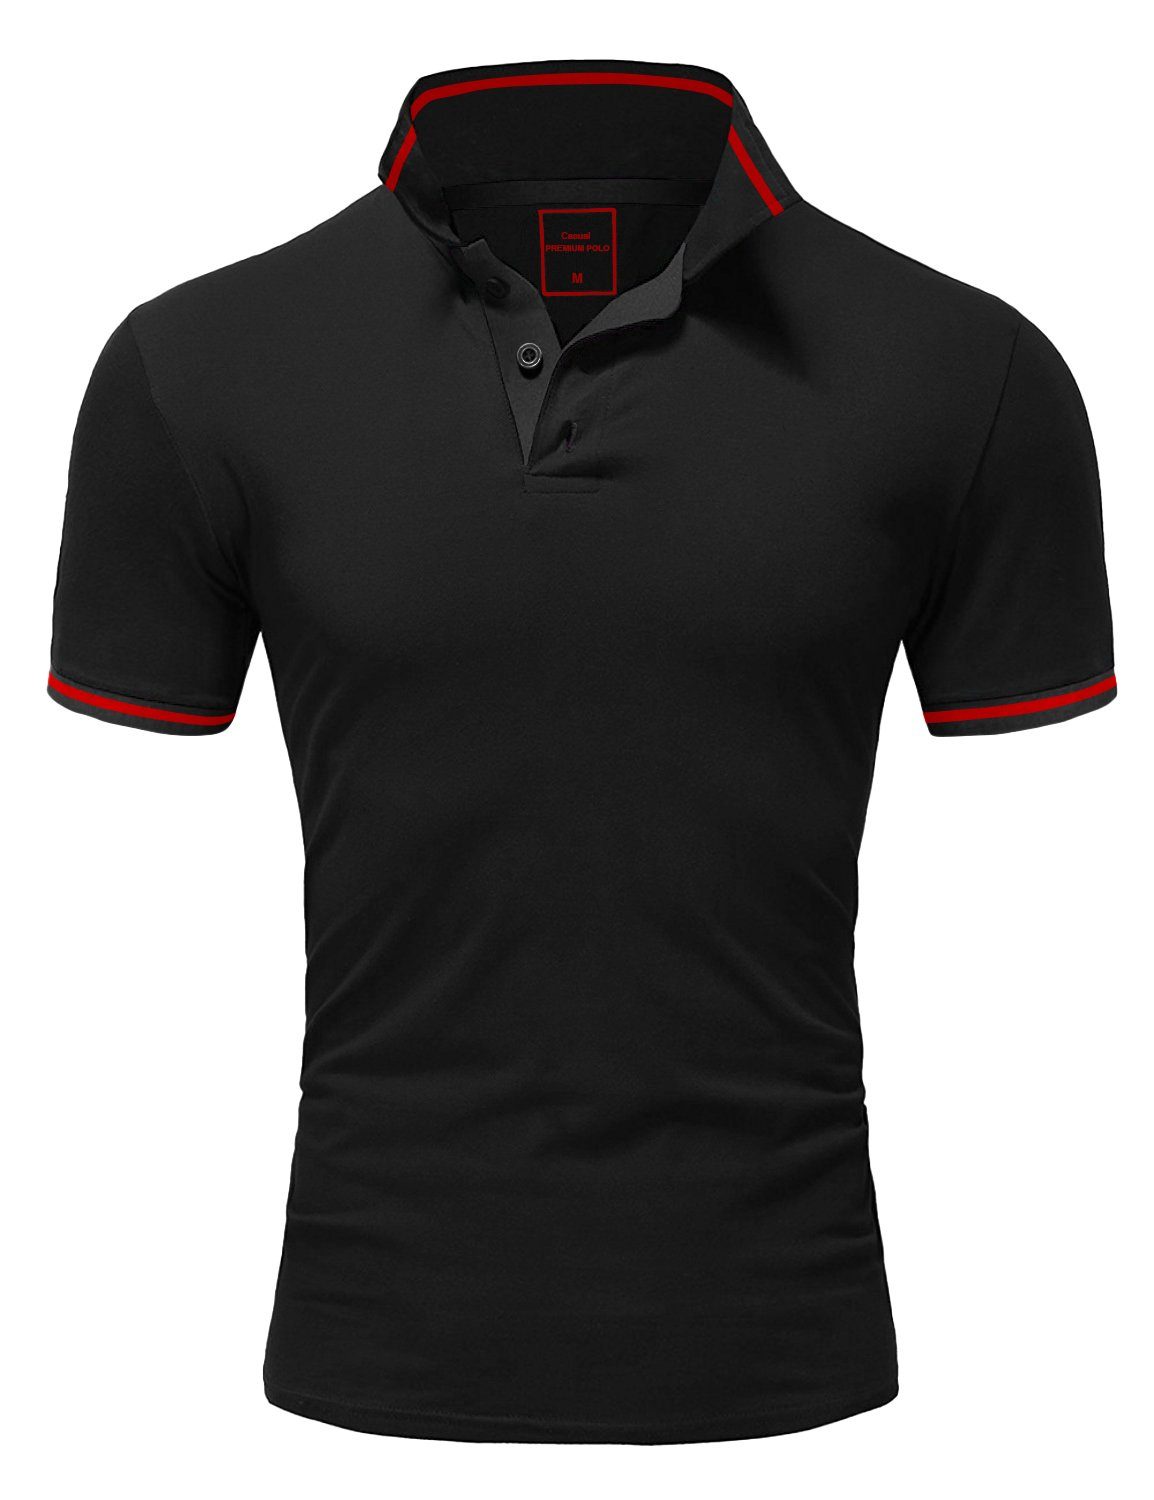 Polohemd Poloshirt Herren T-Shirt Amaci&Sons PROVIDENCE Schwarz/Rot Basic Kurzarm Kontrast